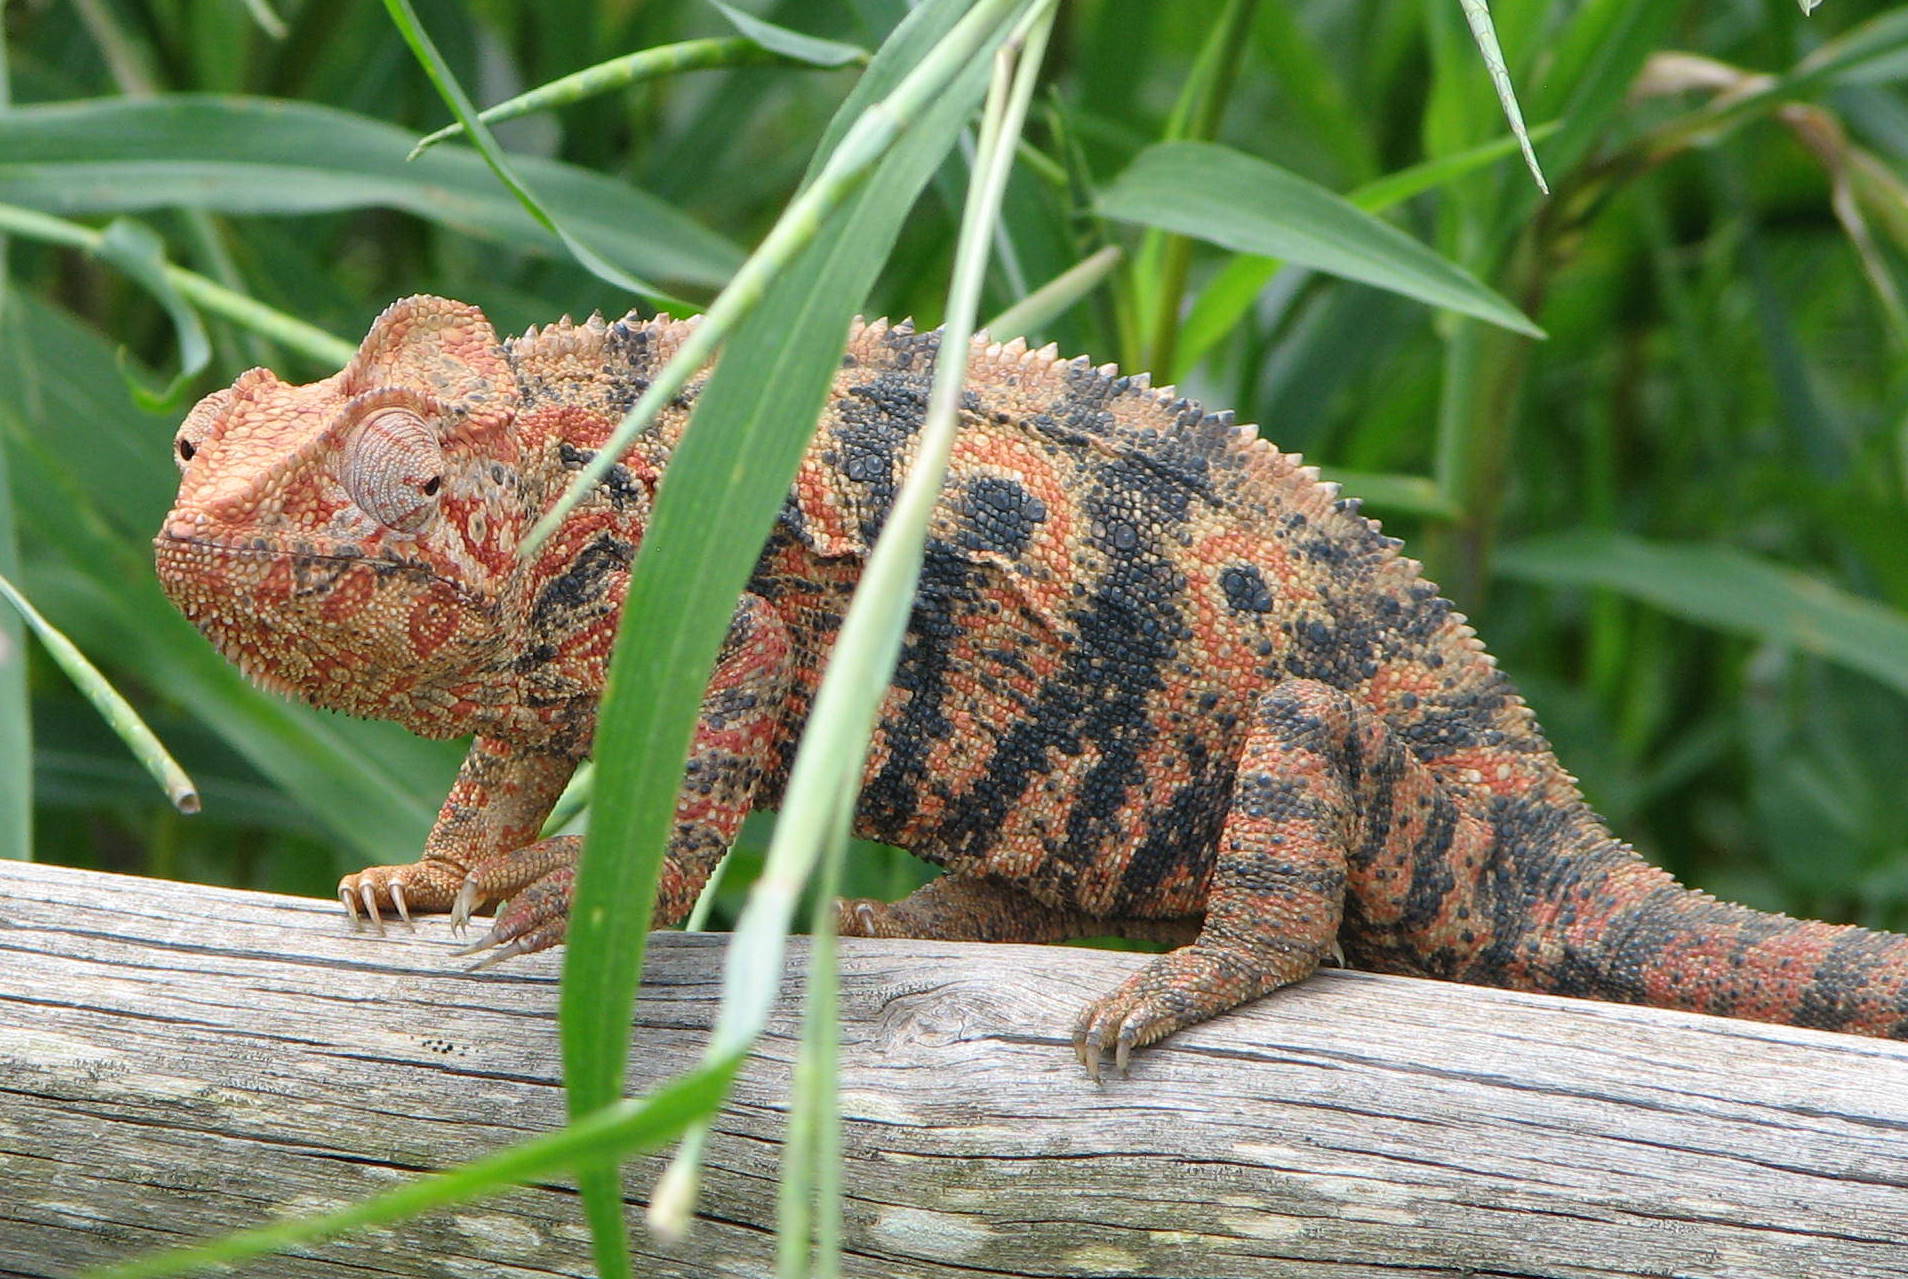 madagaskarský chameleon obrovský (Furcifer oustaleti), foto Bernard Gagnon via Wikimedia Commons